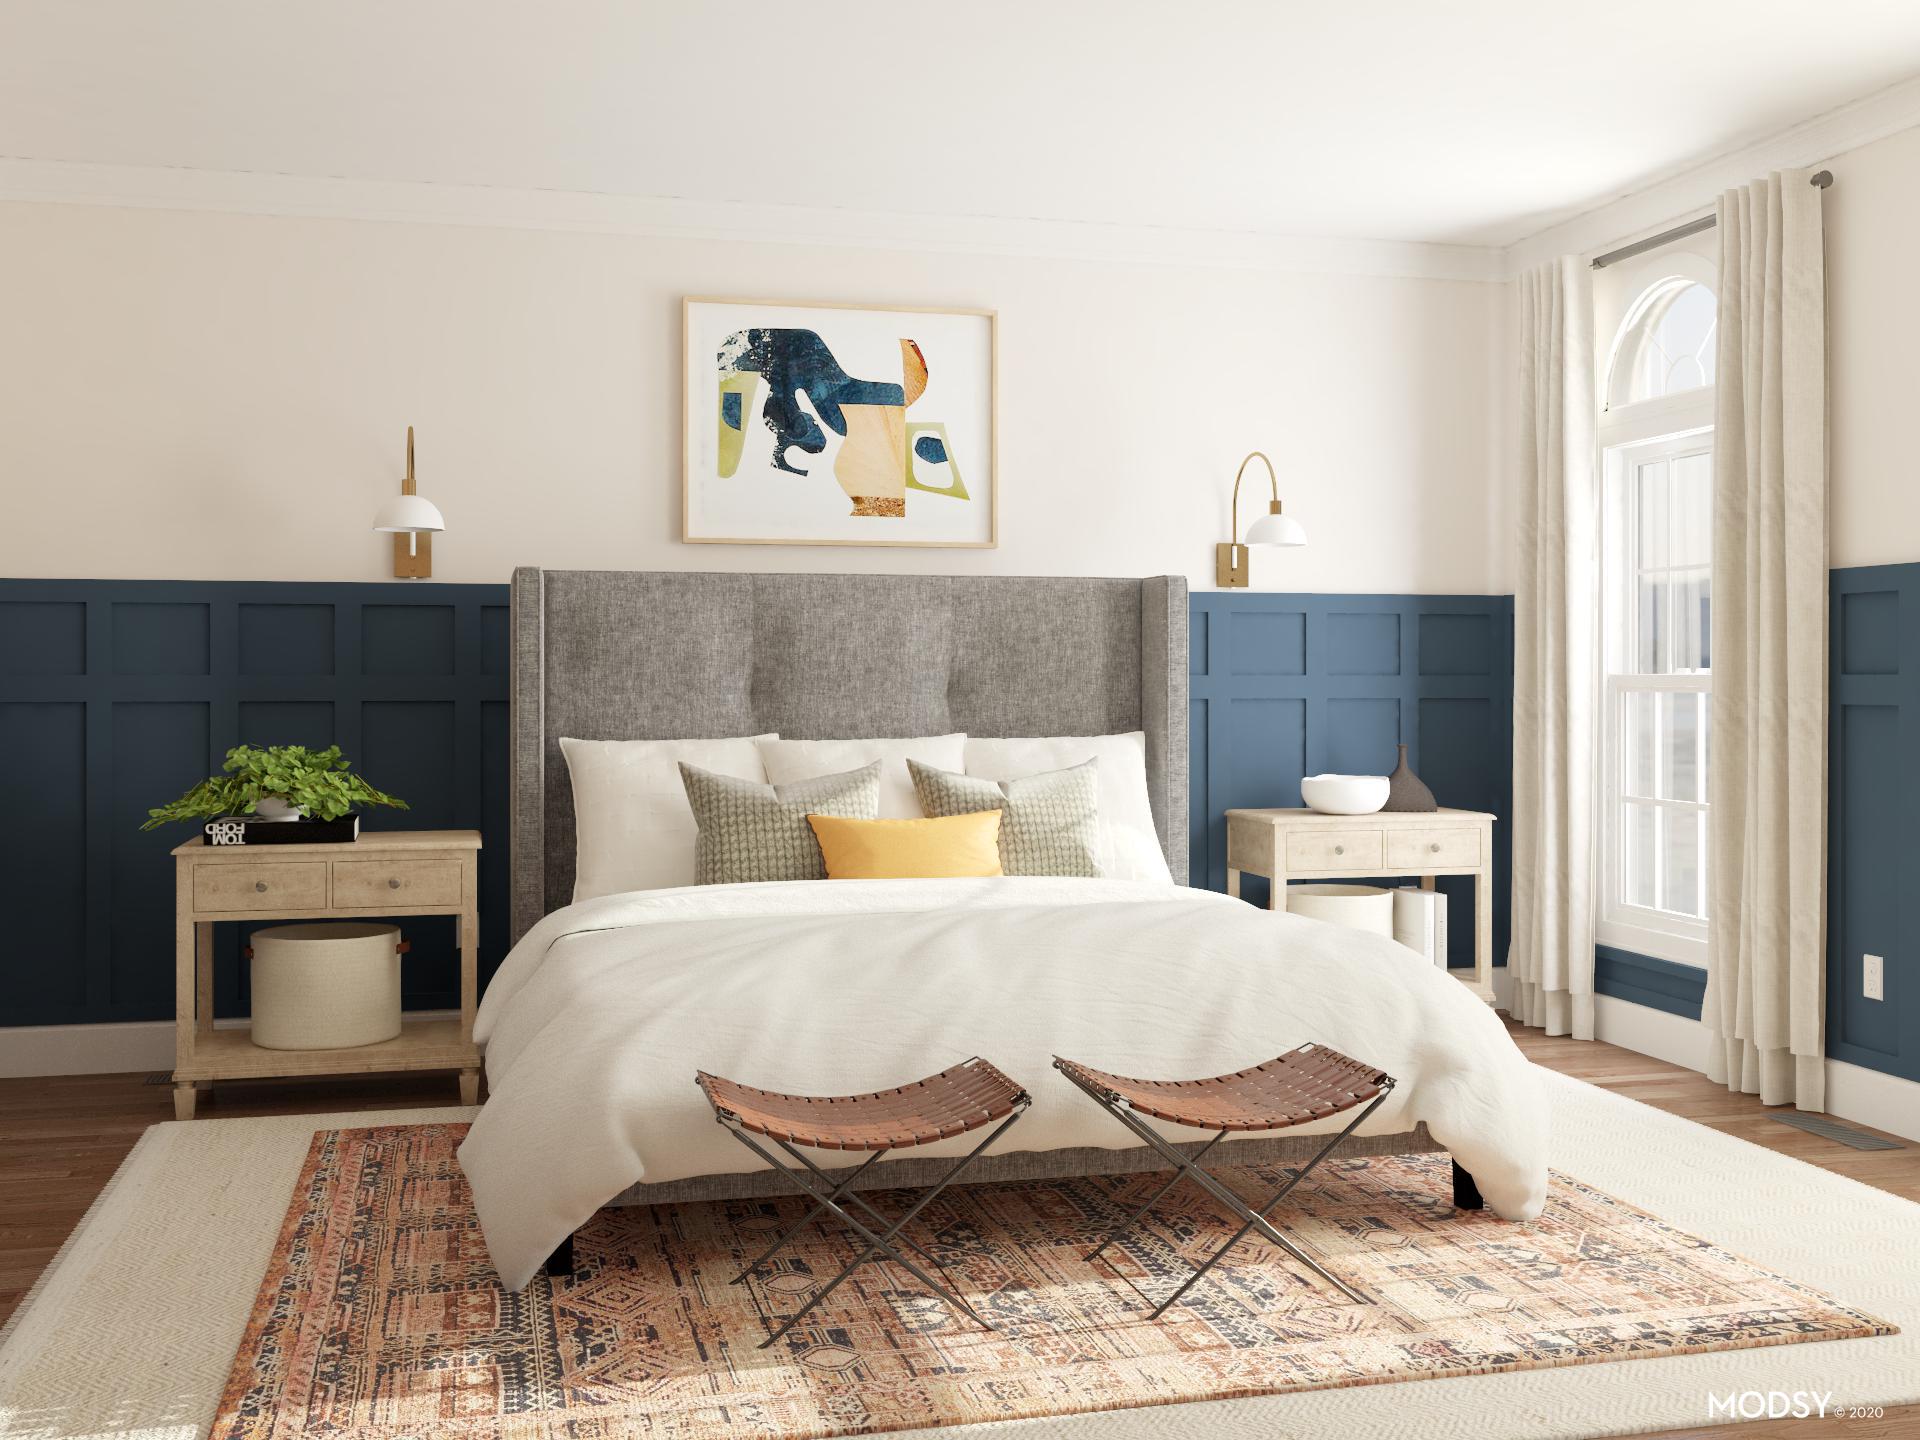 Cozy and functional bedroom design